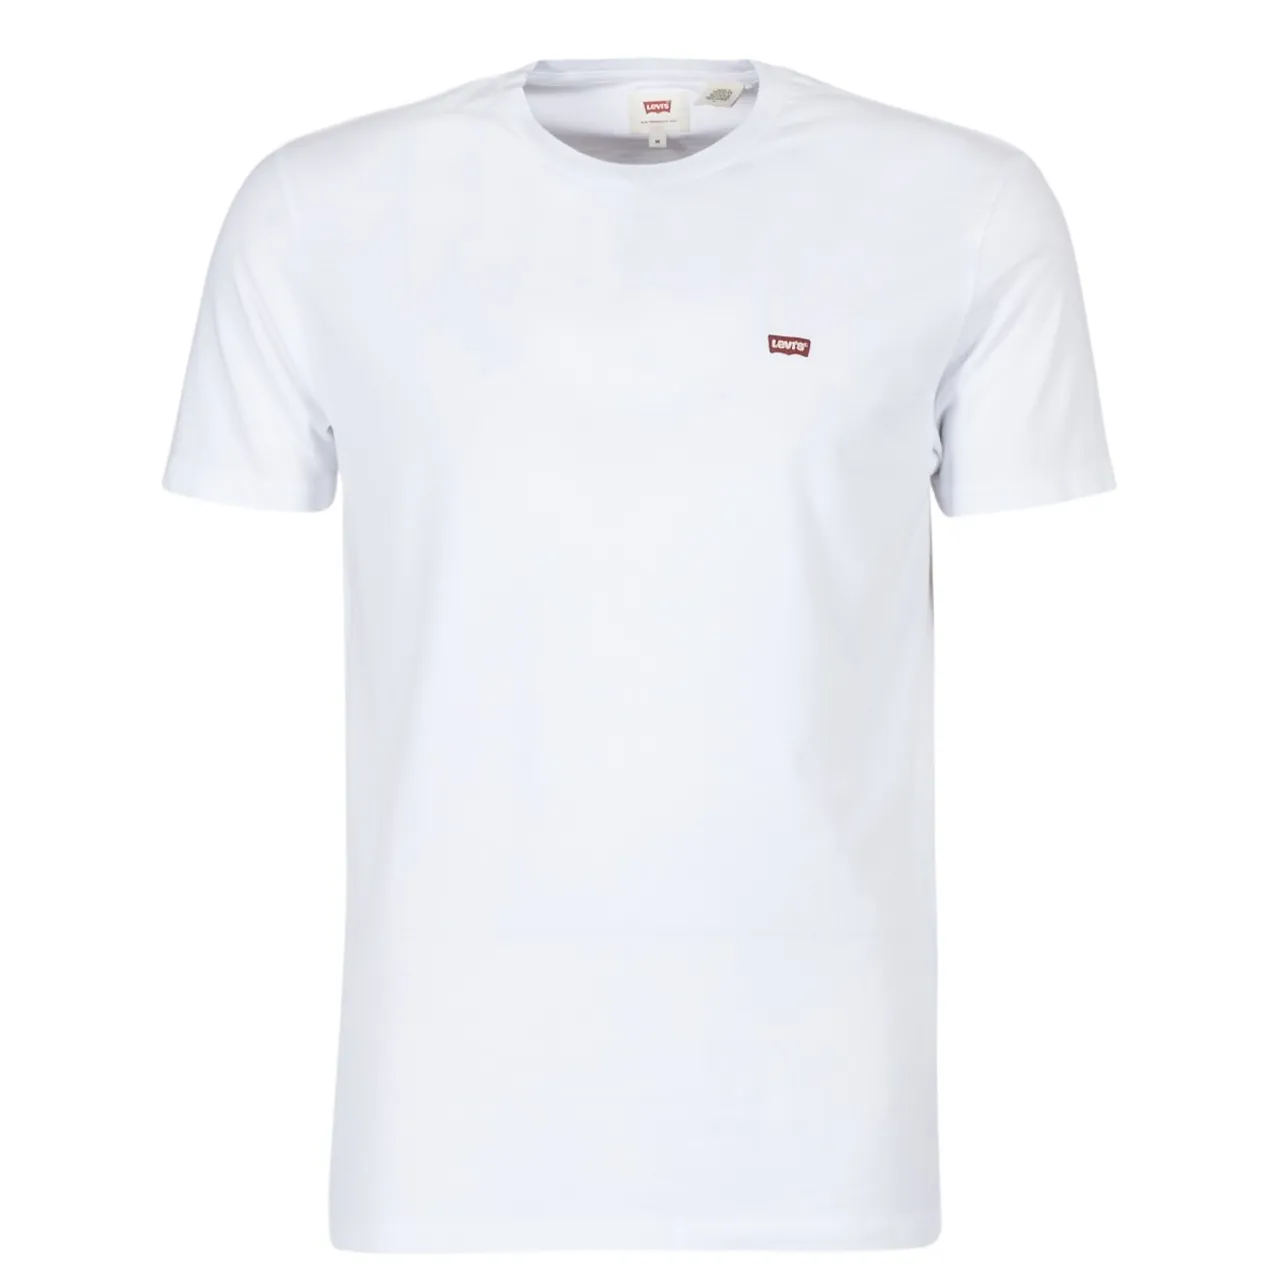 Levis  SS ORIGINAL HM TEE  men's T shirt in White